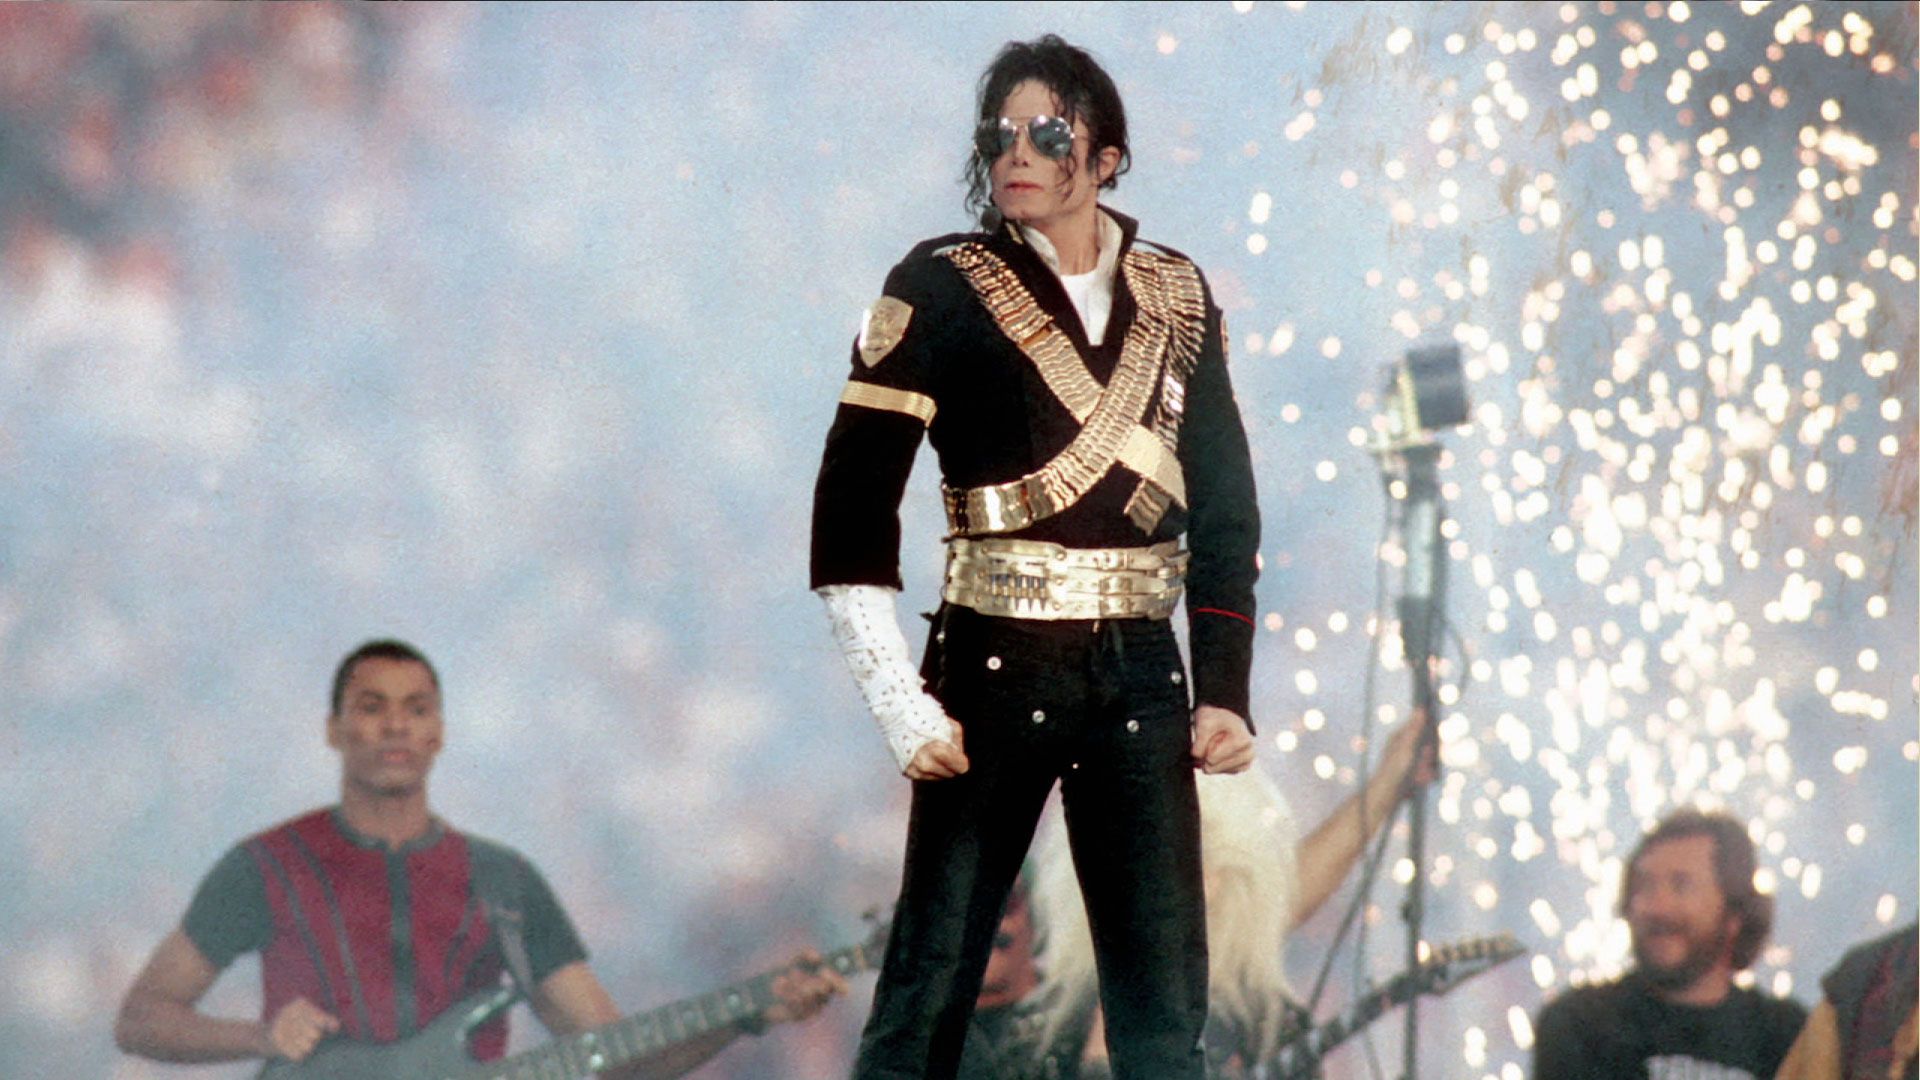 Michael Jackson - Mini Biography